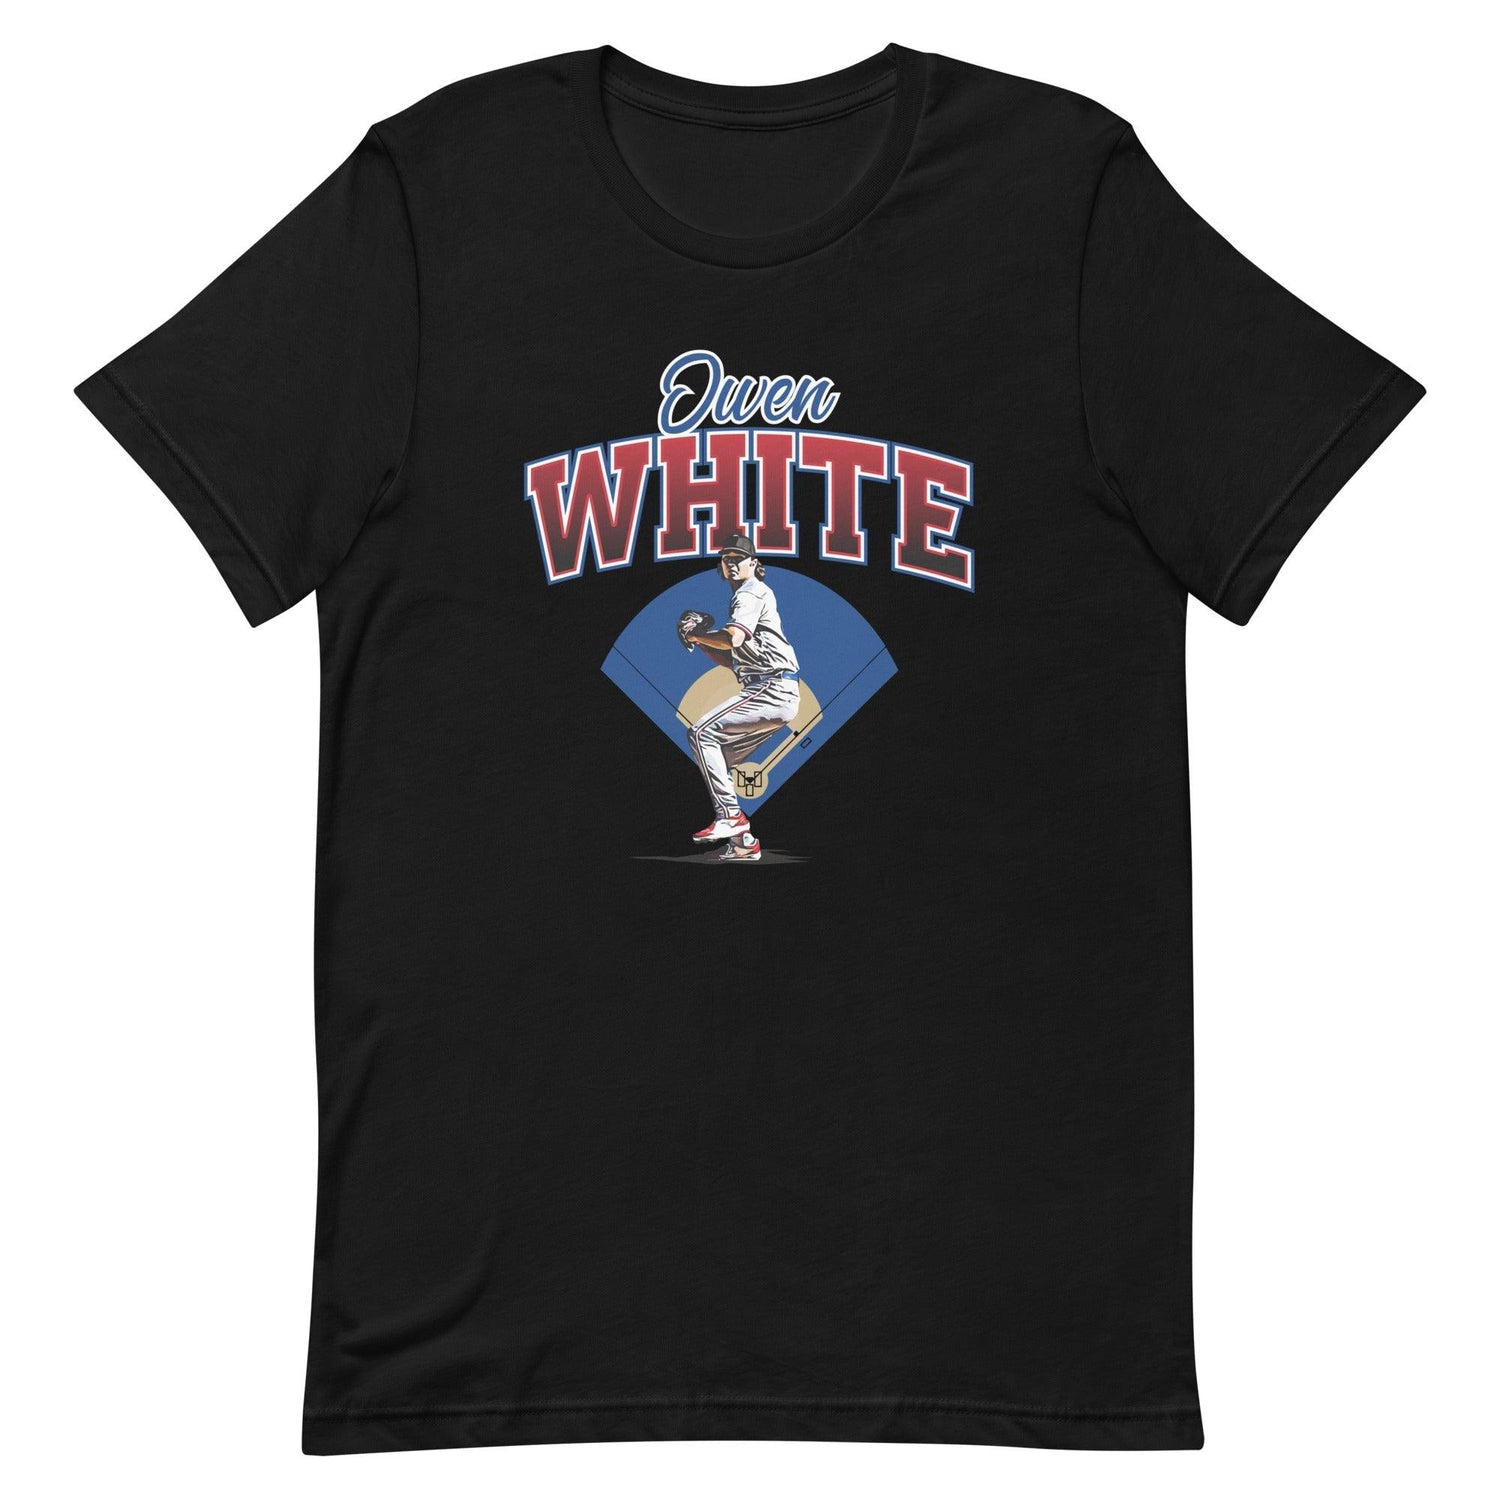 Owen White “Essential” t-shirt - Fan Arch